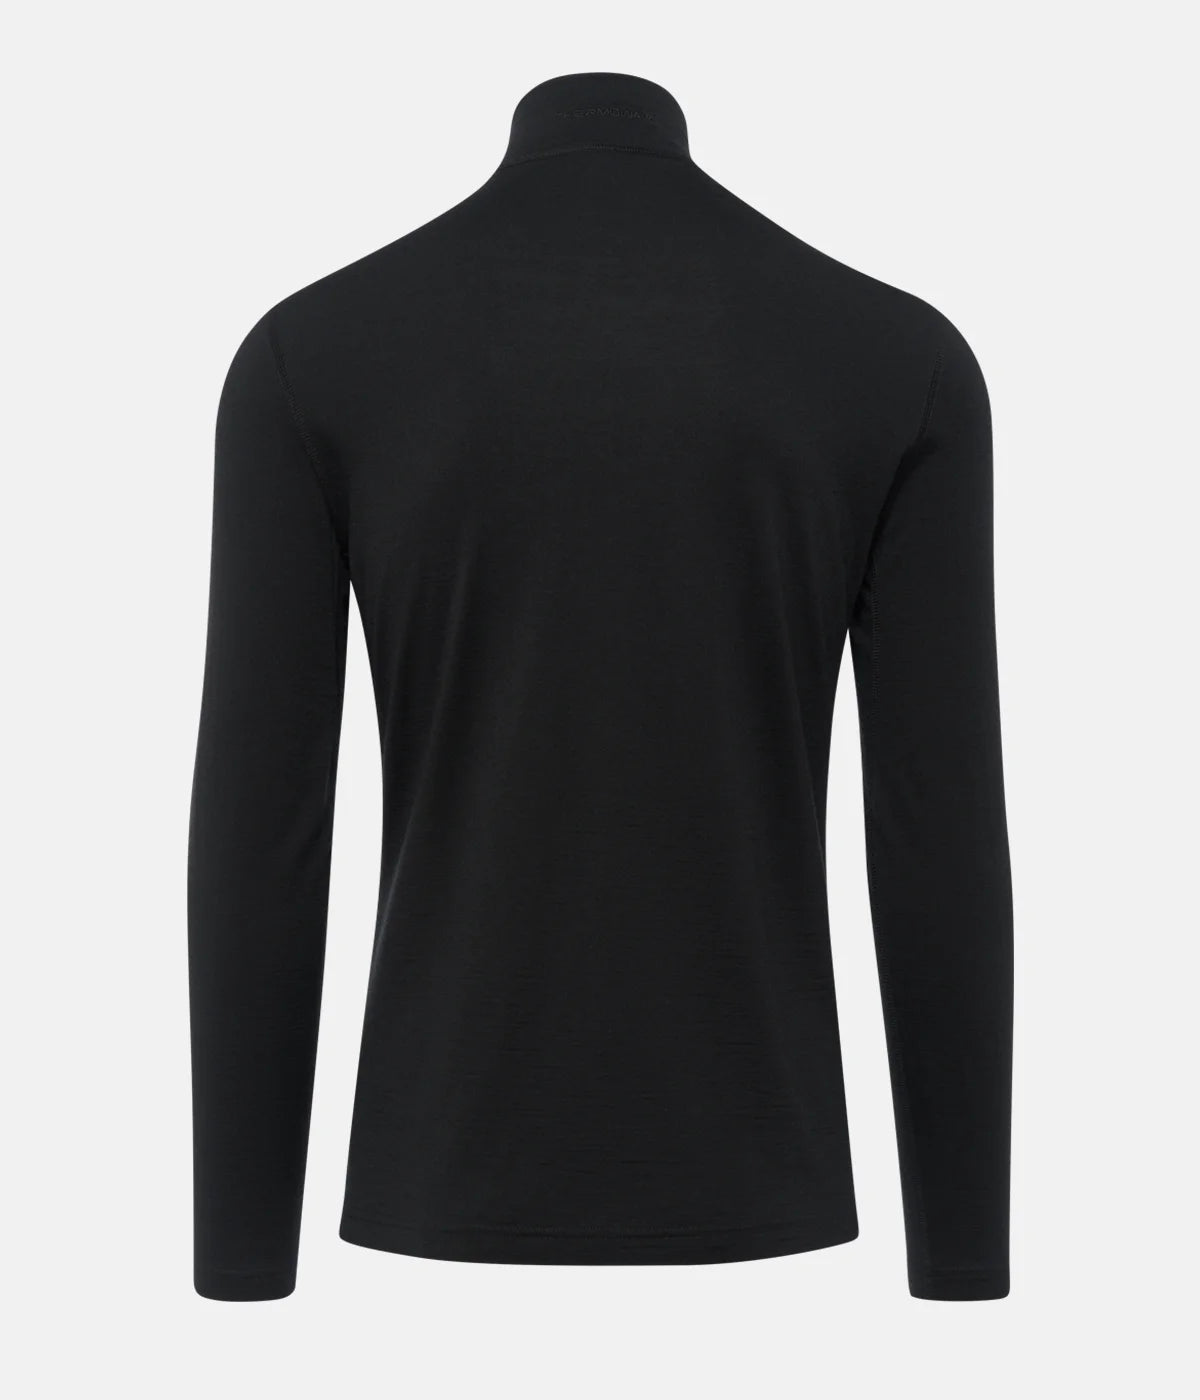 Sample: Men's Merino Wonder Thermal LS Shirt with 1/2 Zip